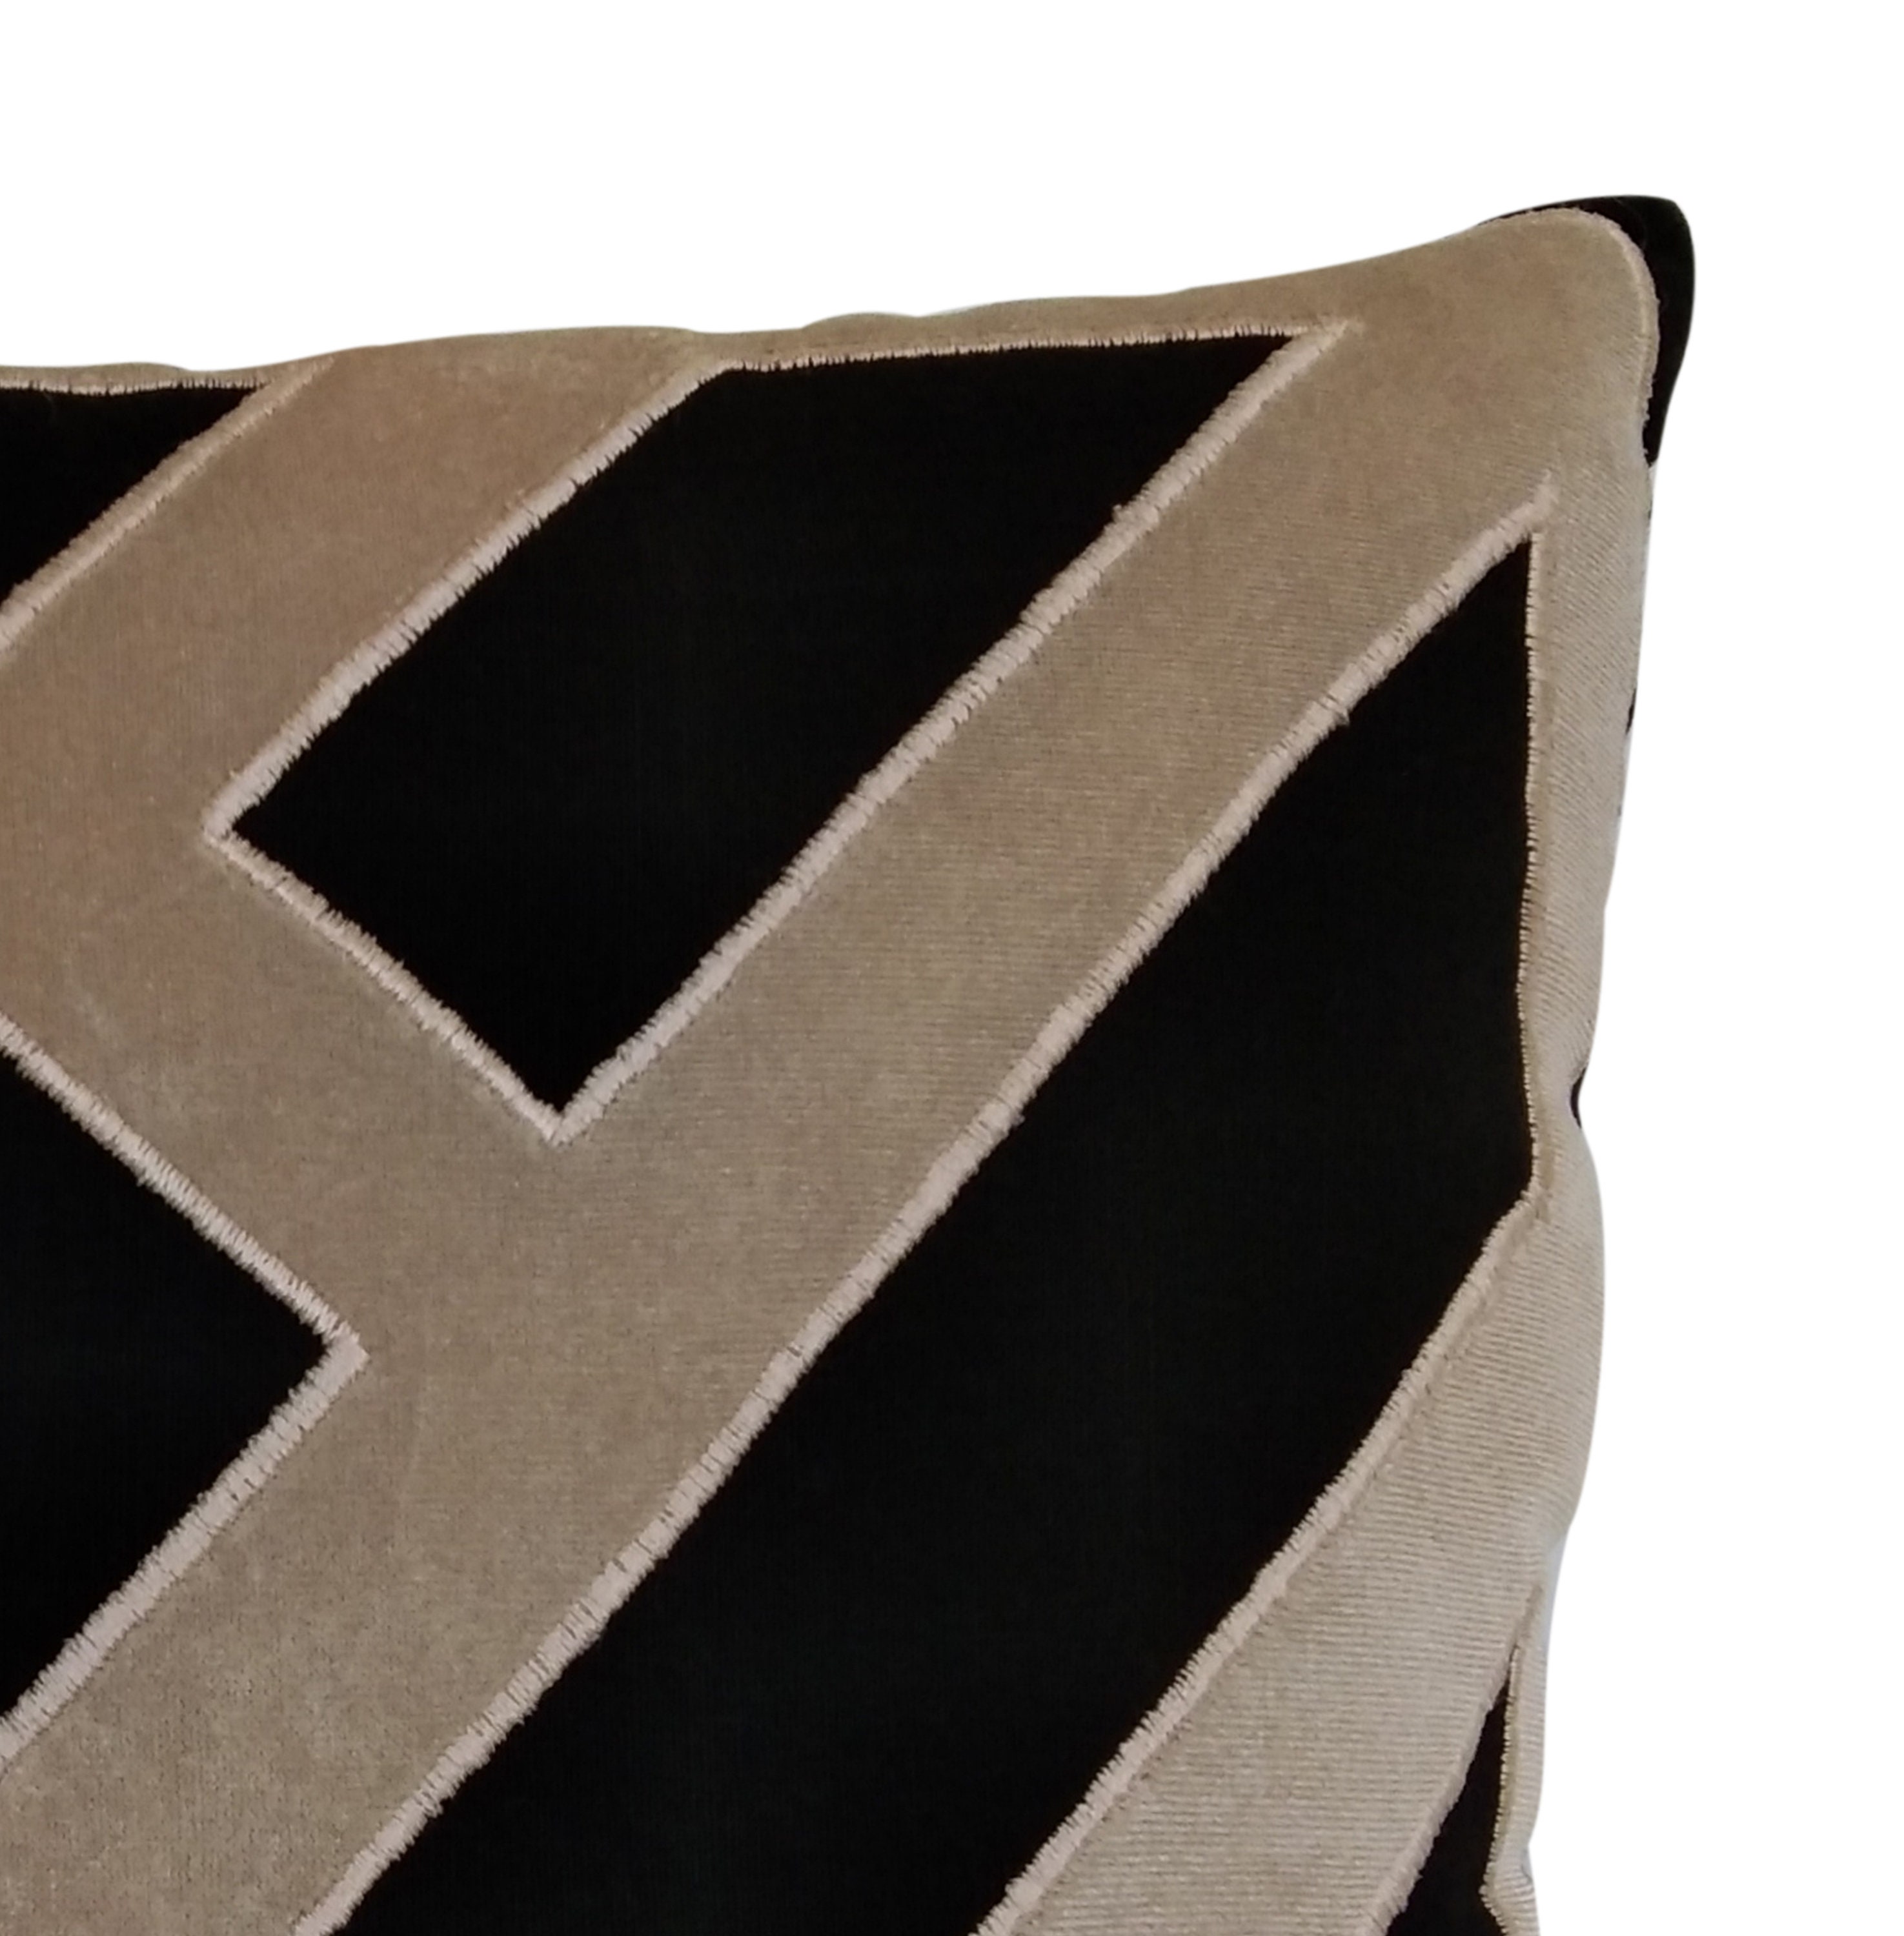 Buy Decorative Throw Pillow Cover Black Linen Pillow Beige Online in ...